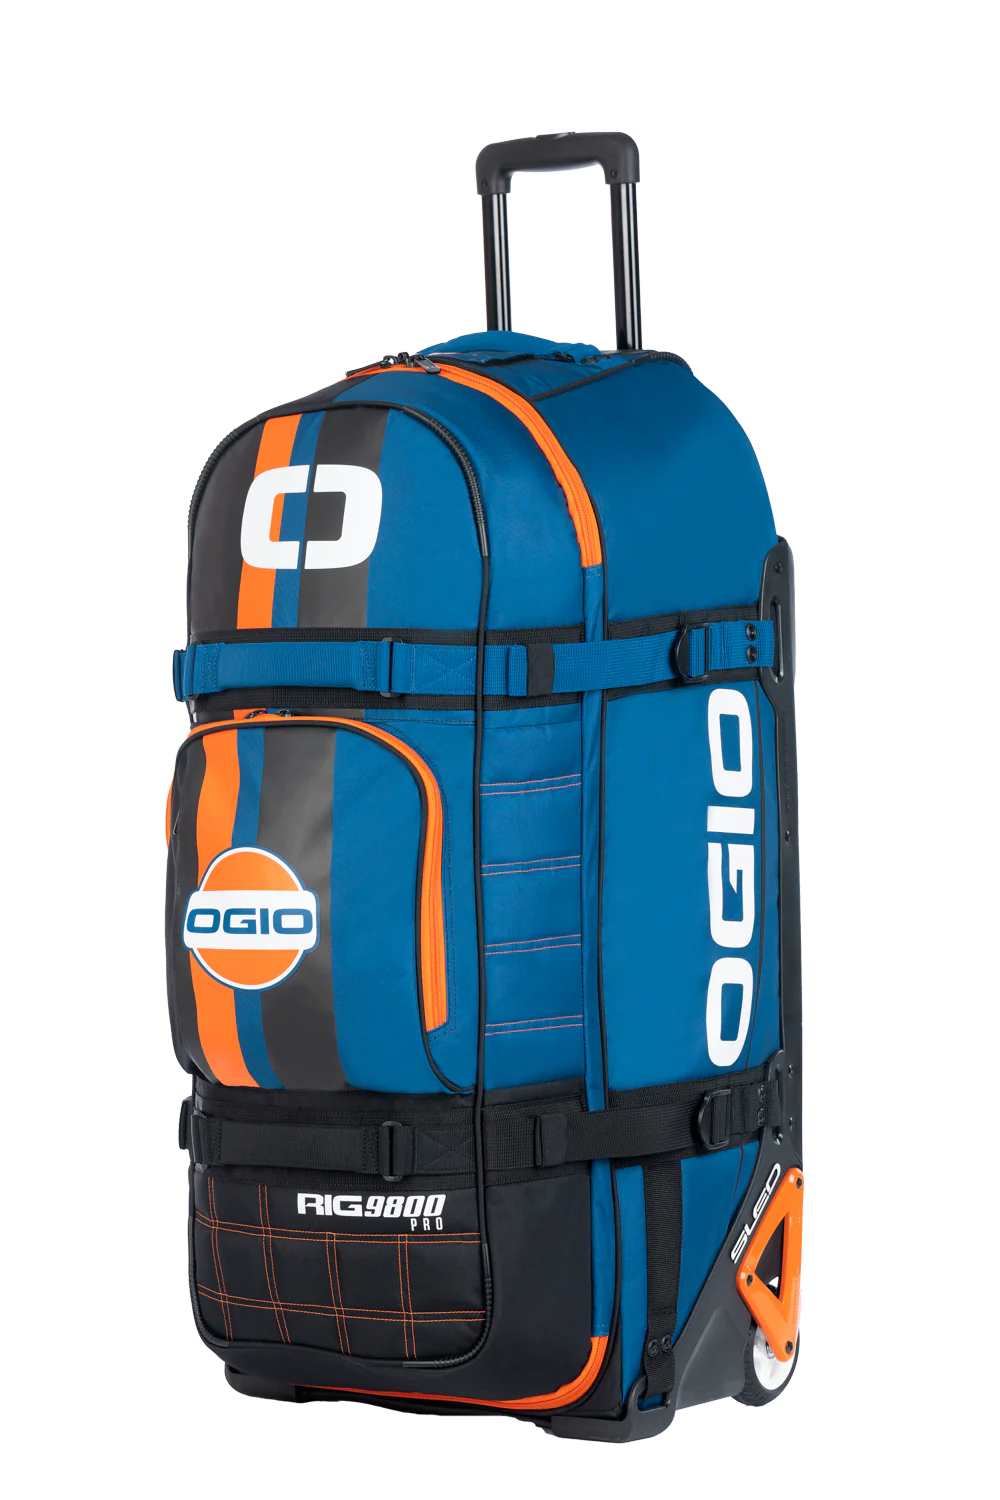 OGIO Rig 9800 Pro Gearbag - Petrol